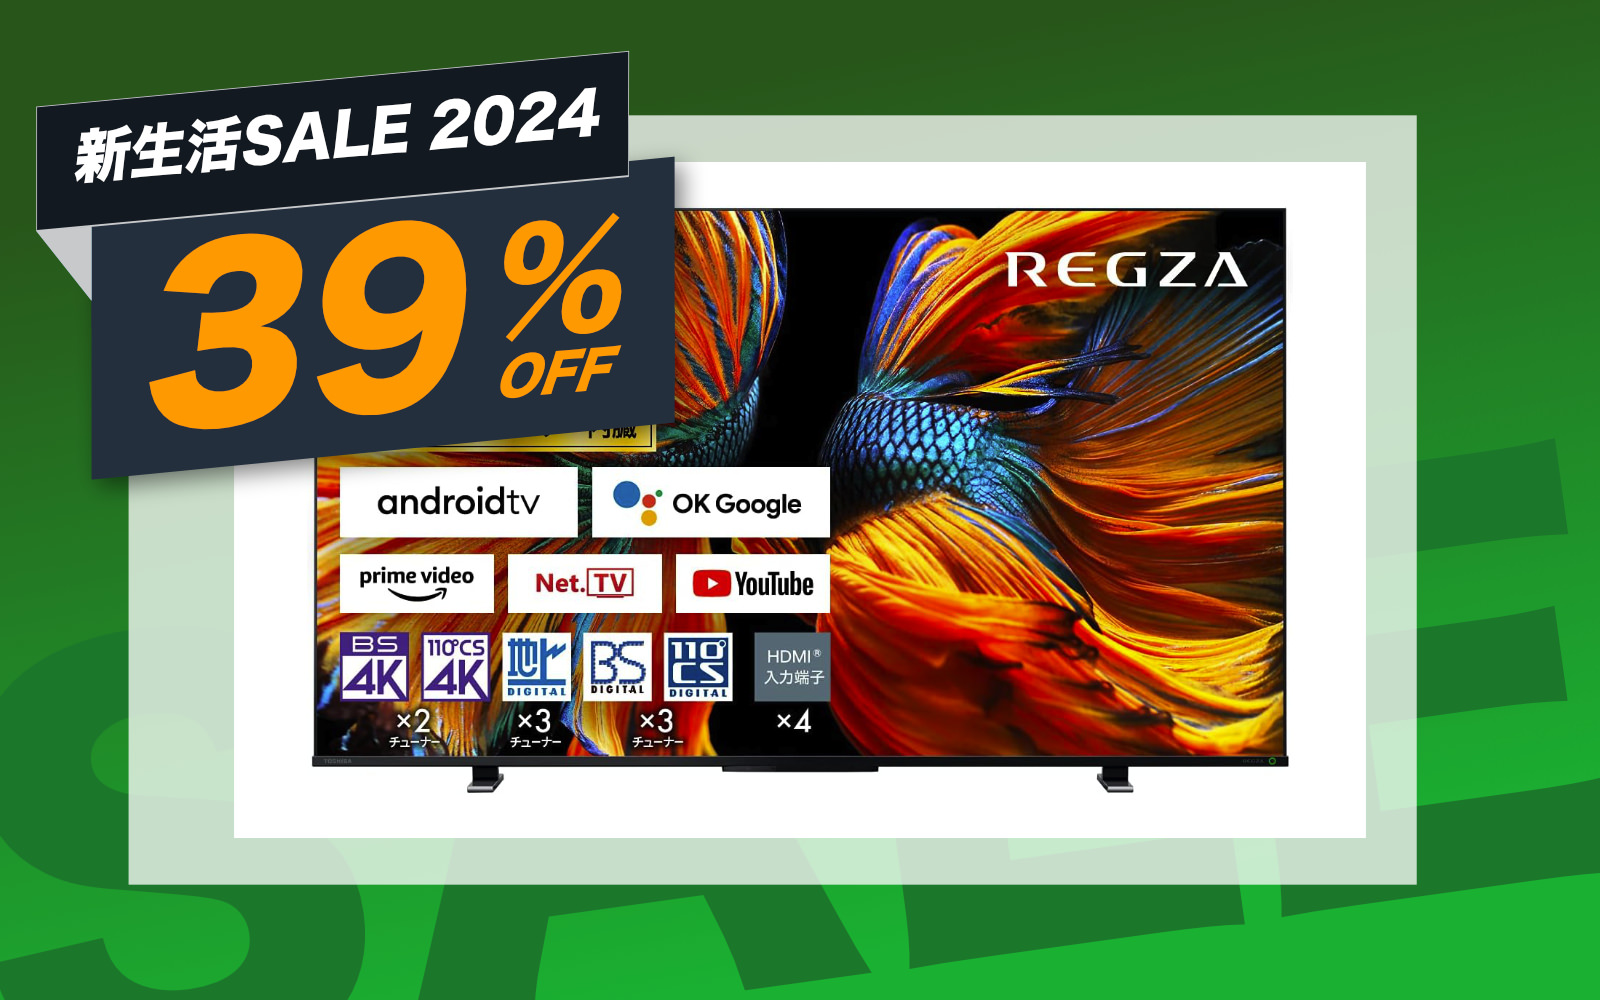 REGZA TV 55v on sale